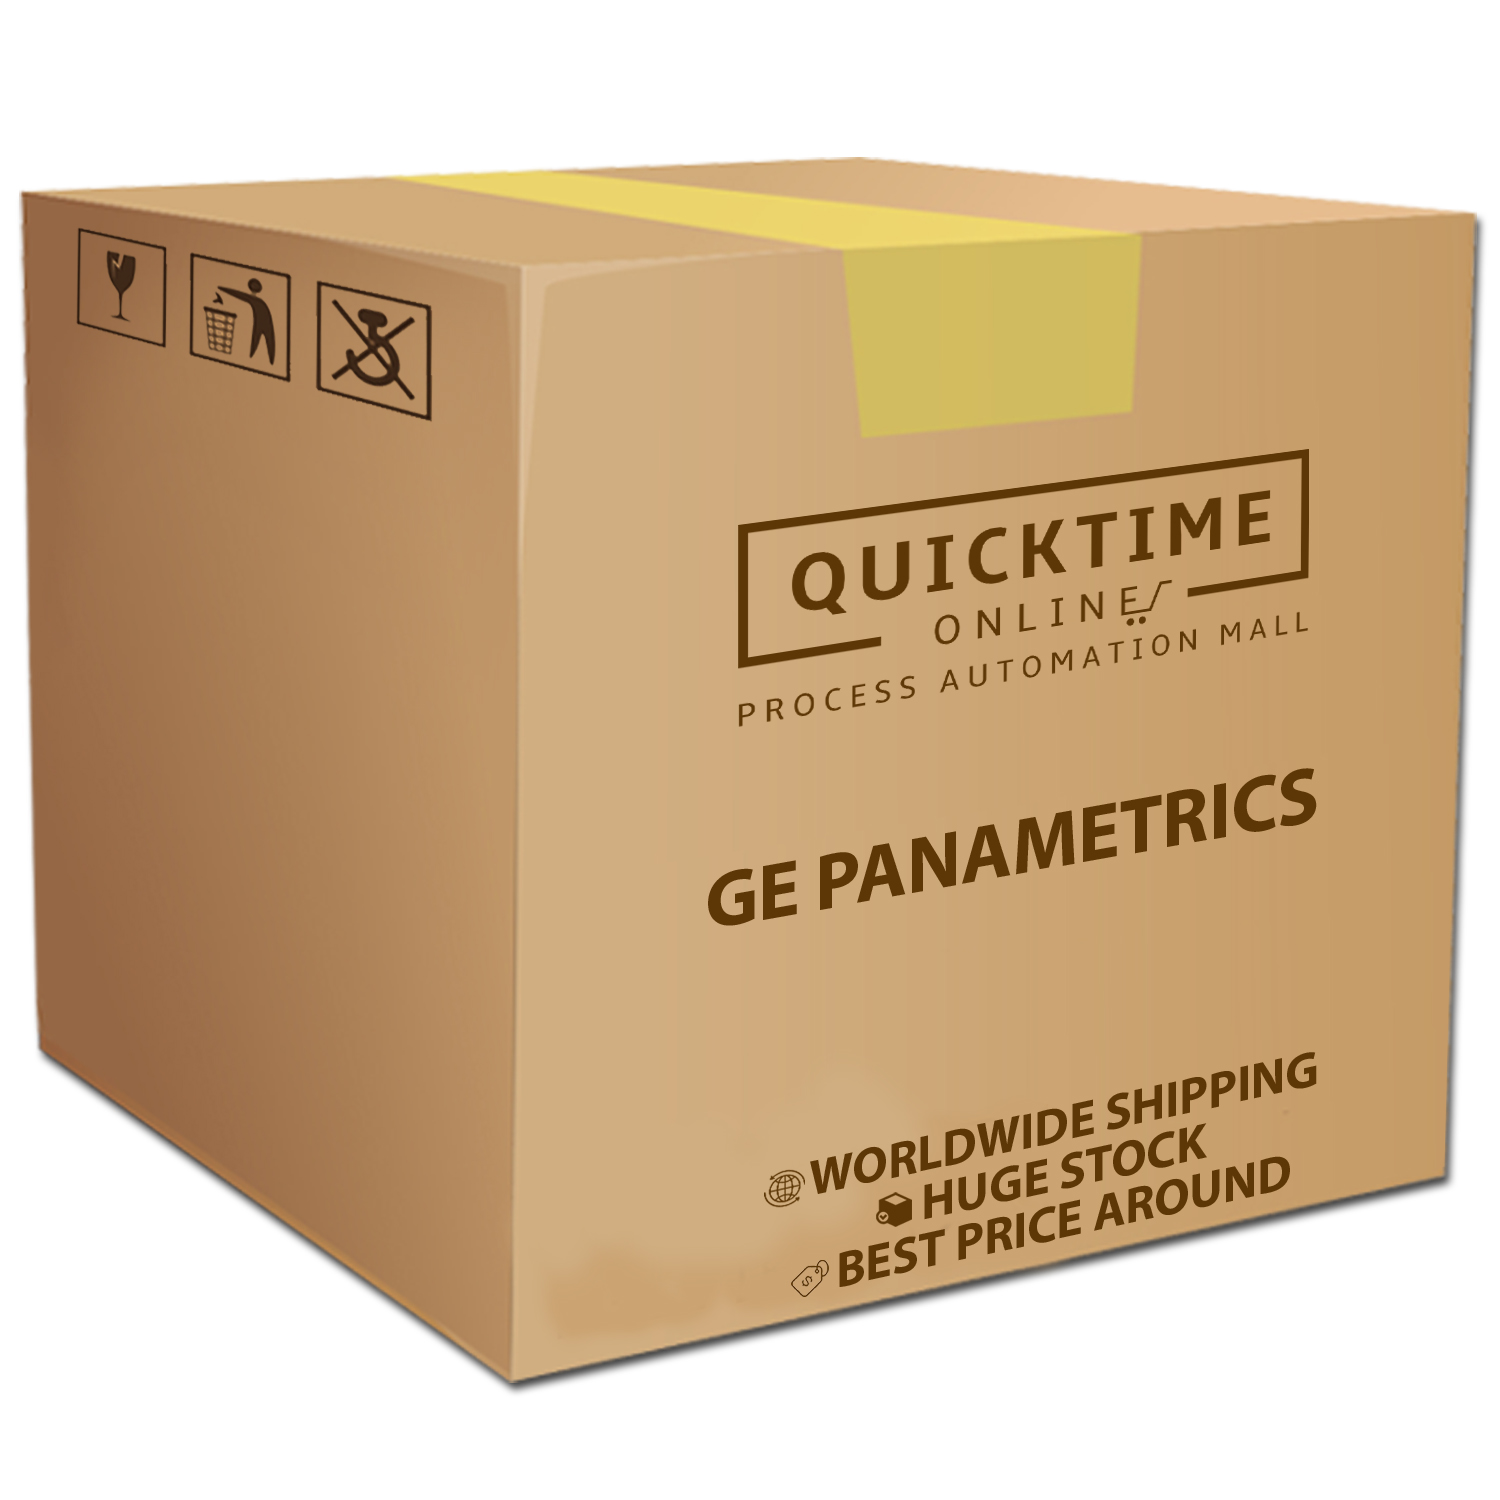 703-1358-02 New GE Panametrics ModBus Option Card for DF868/GX868 Flowmeters